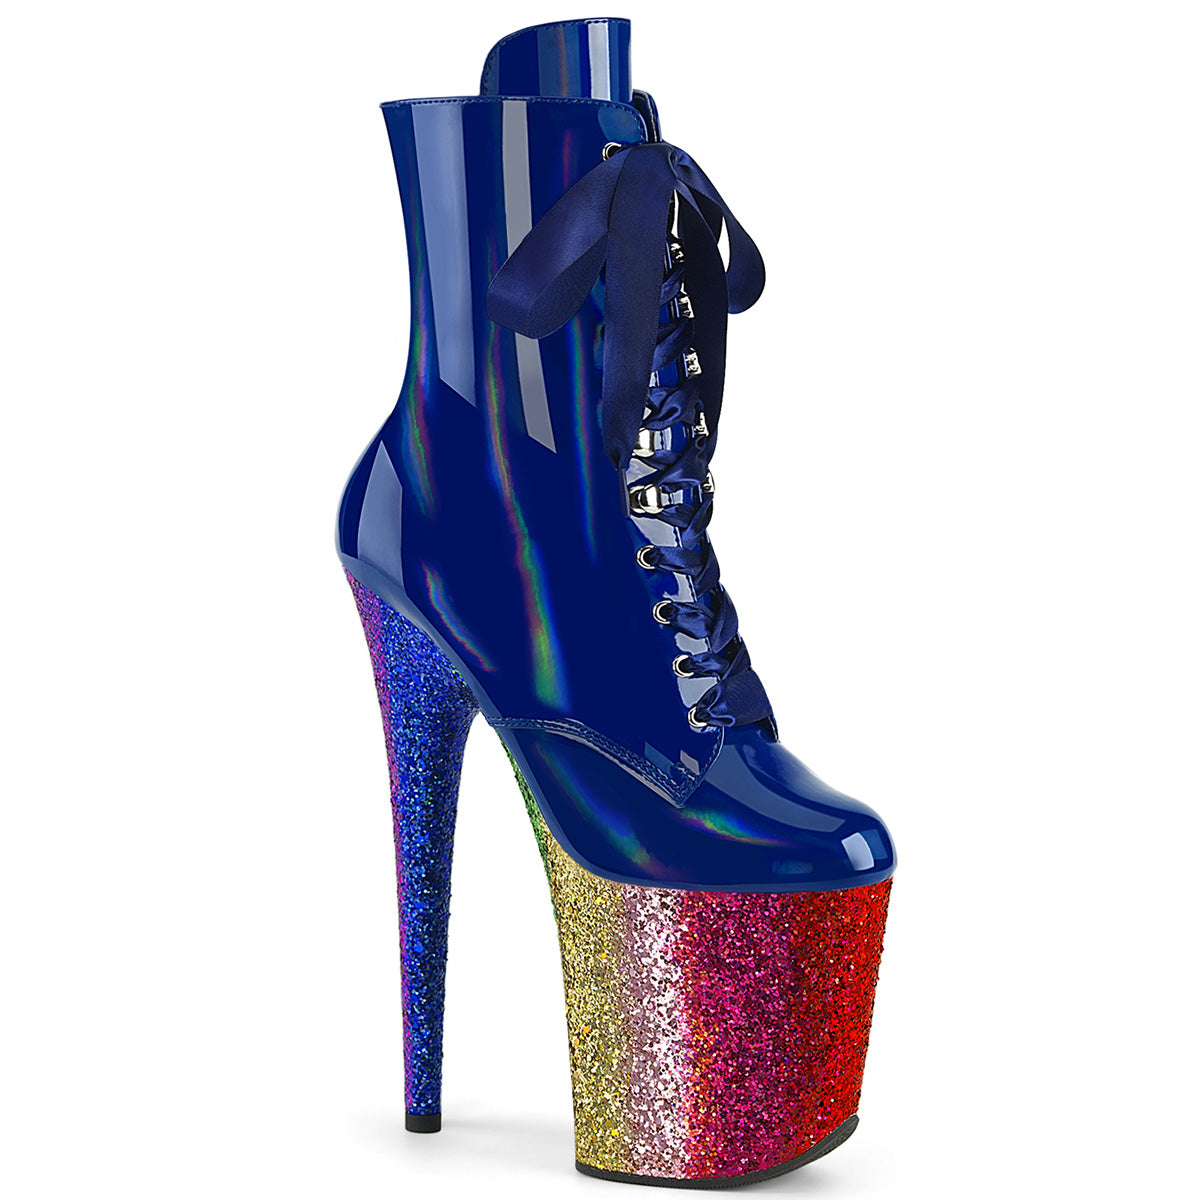 FLAMINGO-1020HG Strippers Heels Pleaser Platforms (Exotic Dancing) Royal Blue Holo Pat/Rainbow Glitter